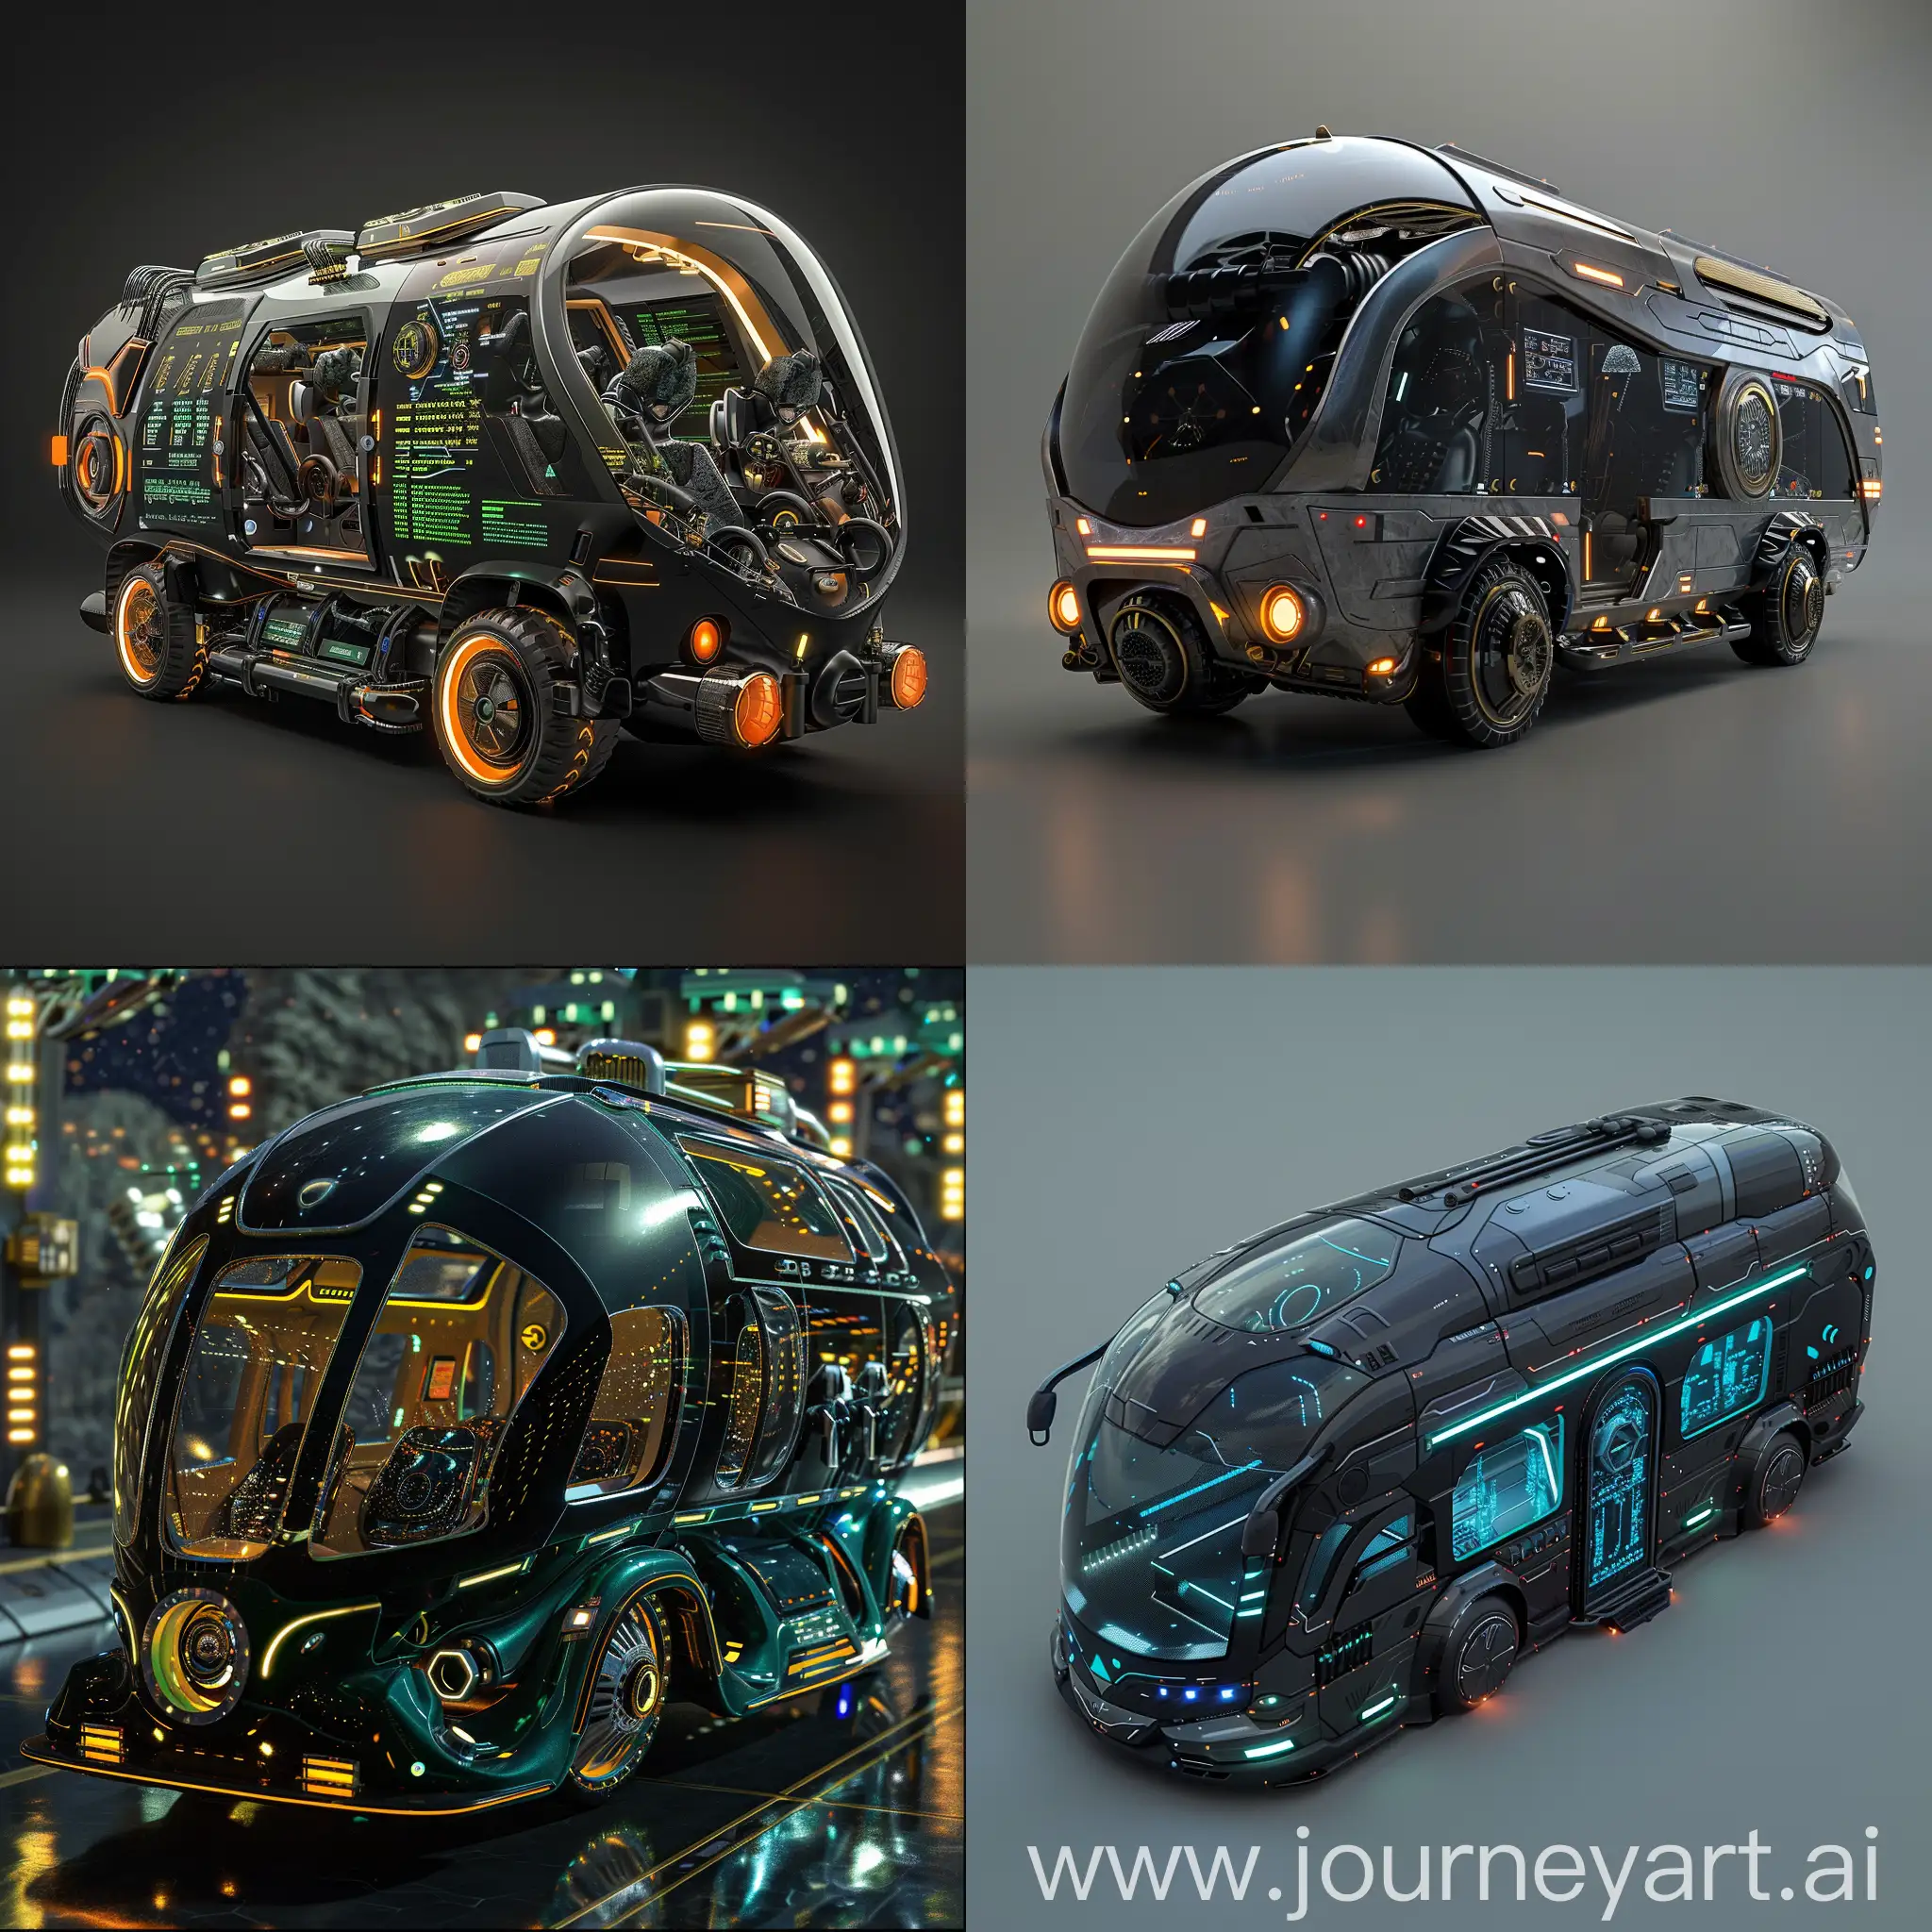 Futuristic-SciFi-Microbus-with-Quantum-Core-Engine-and-Holographic-Controls